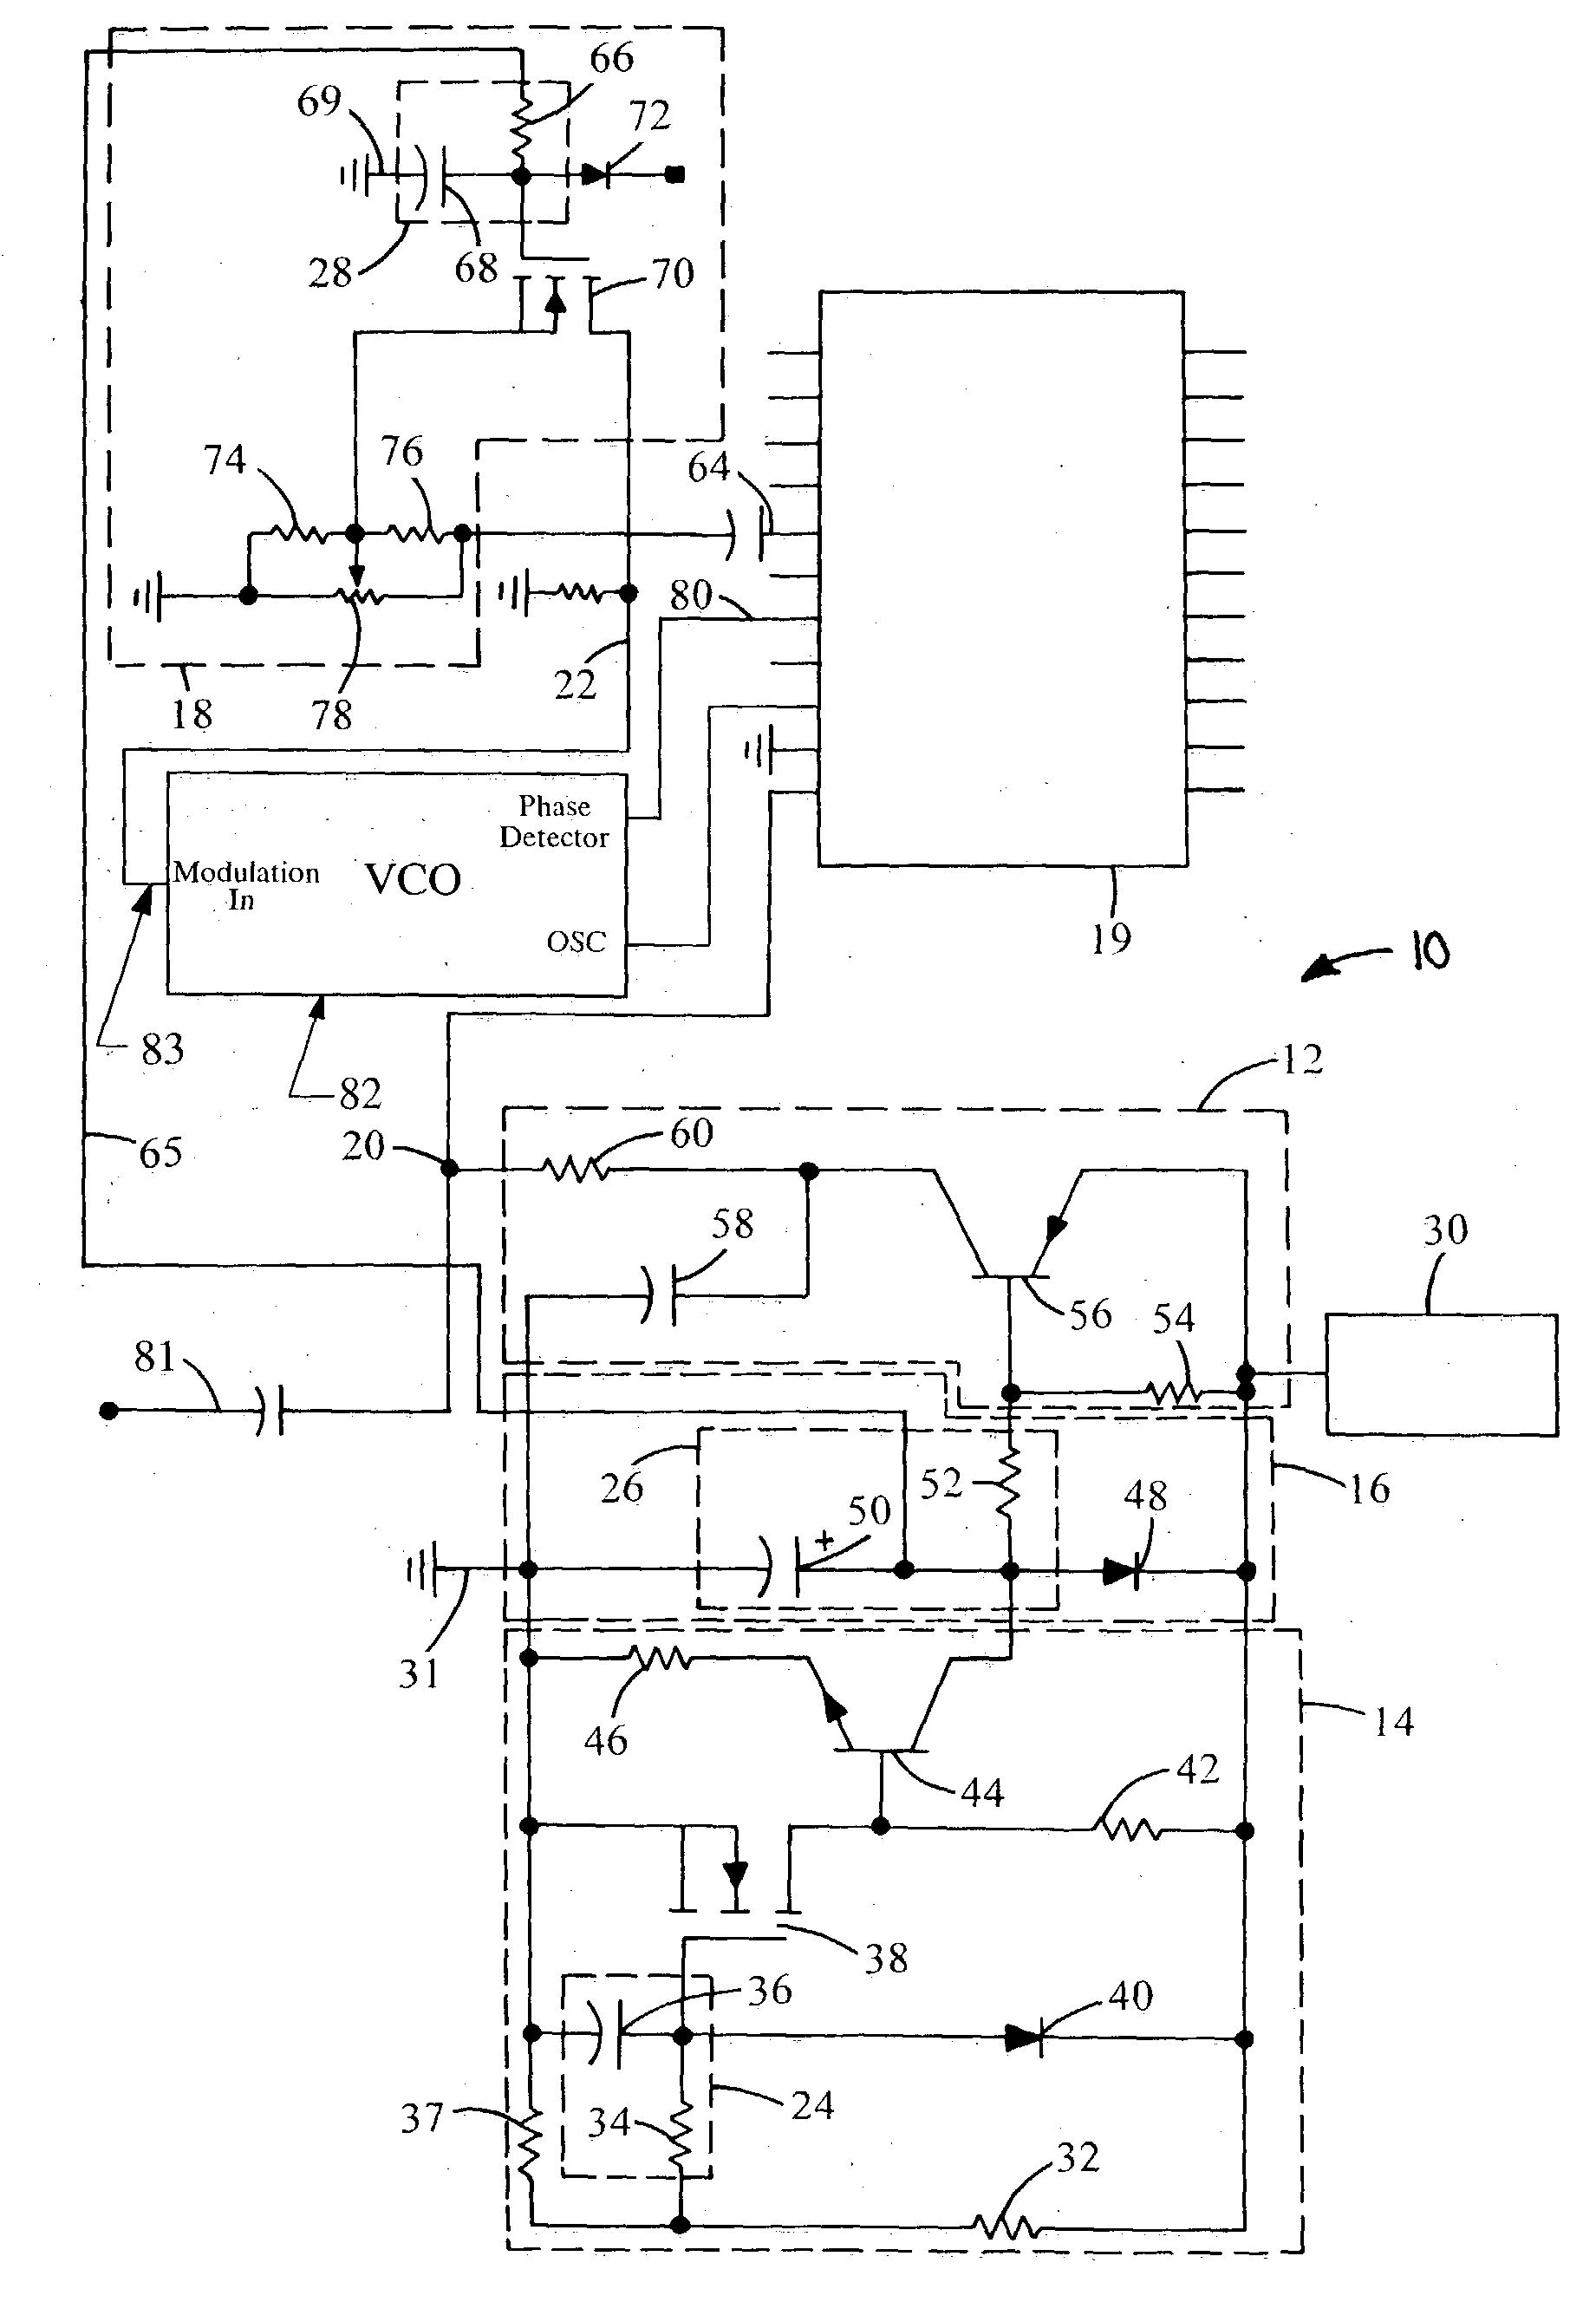 FM modulator output control during turn on